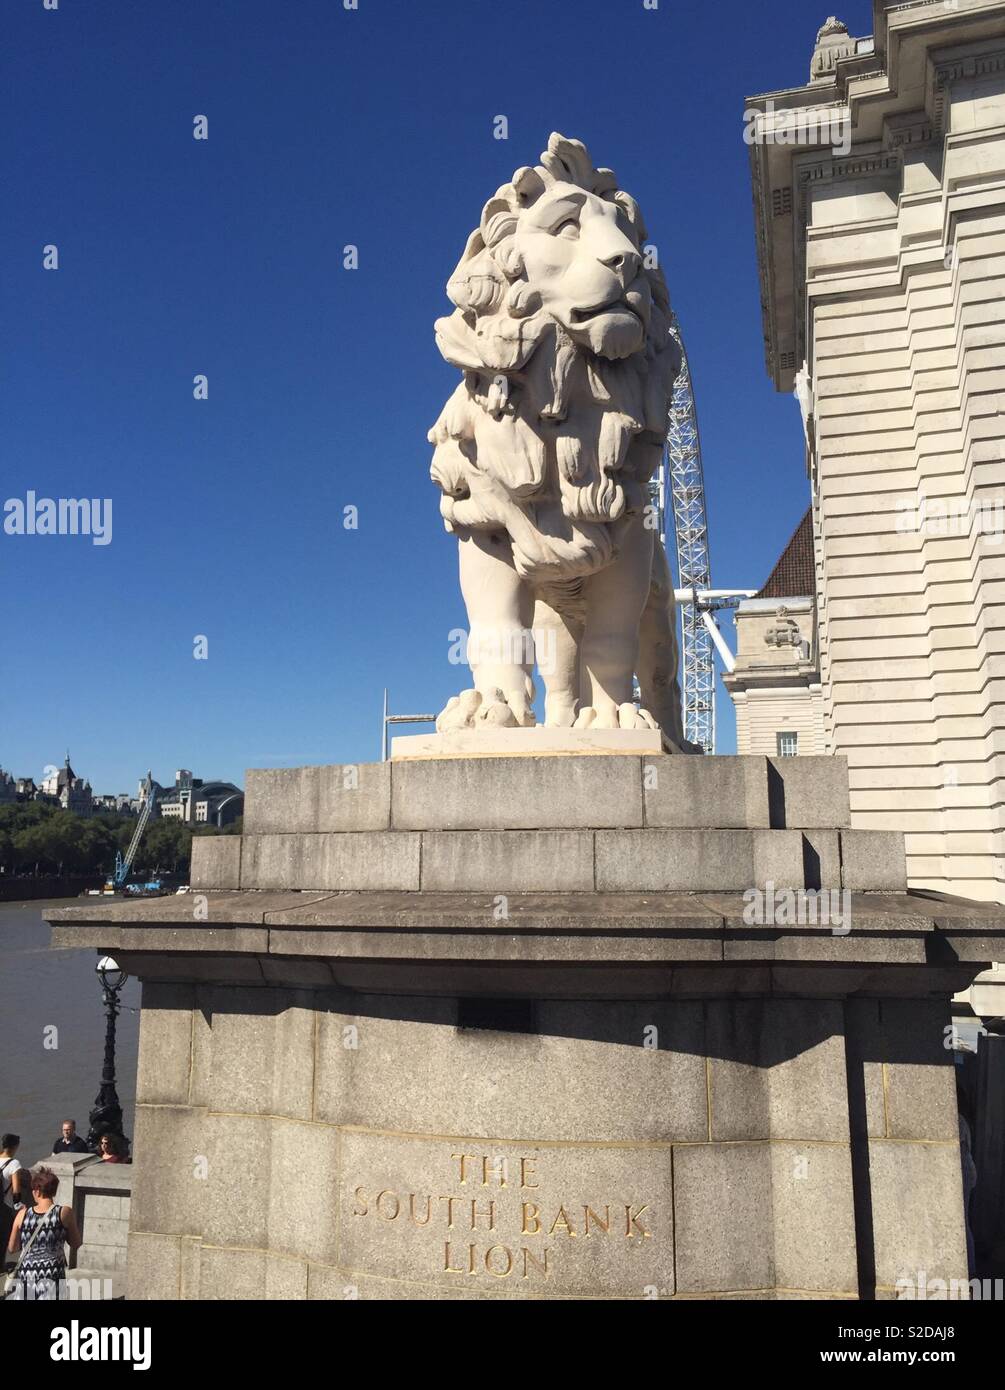 Lion at London south bank Stock Photo